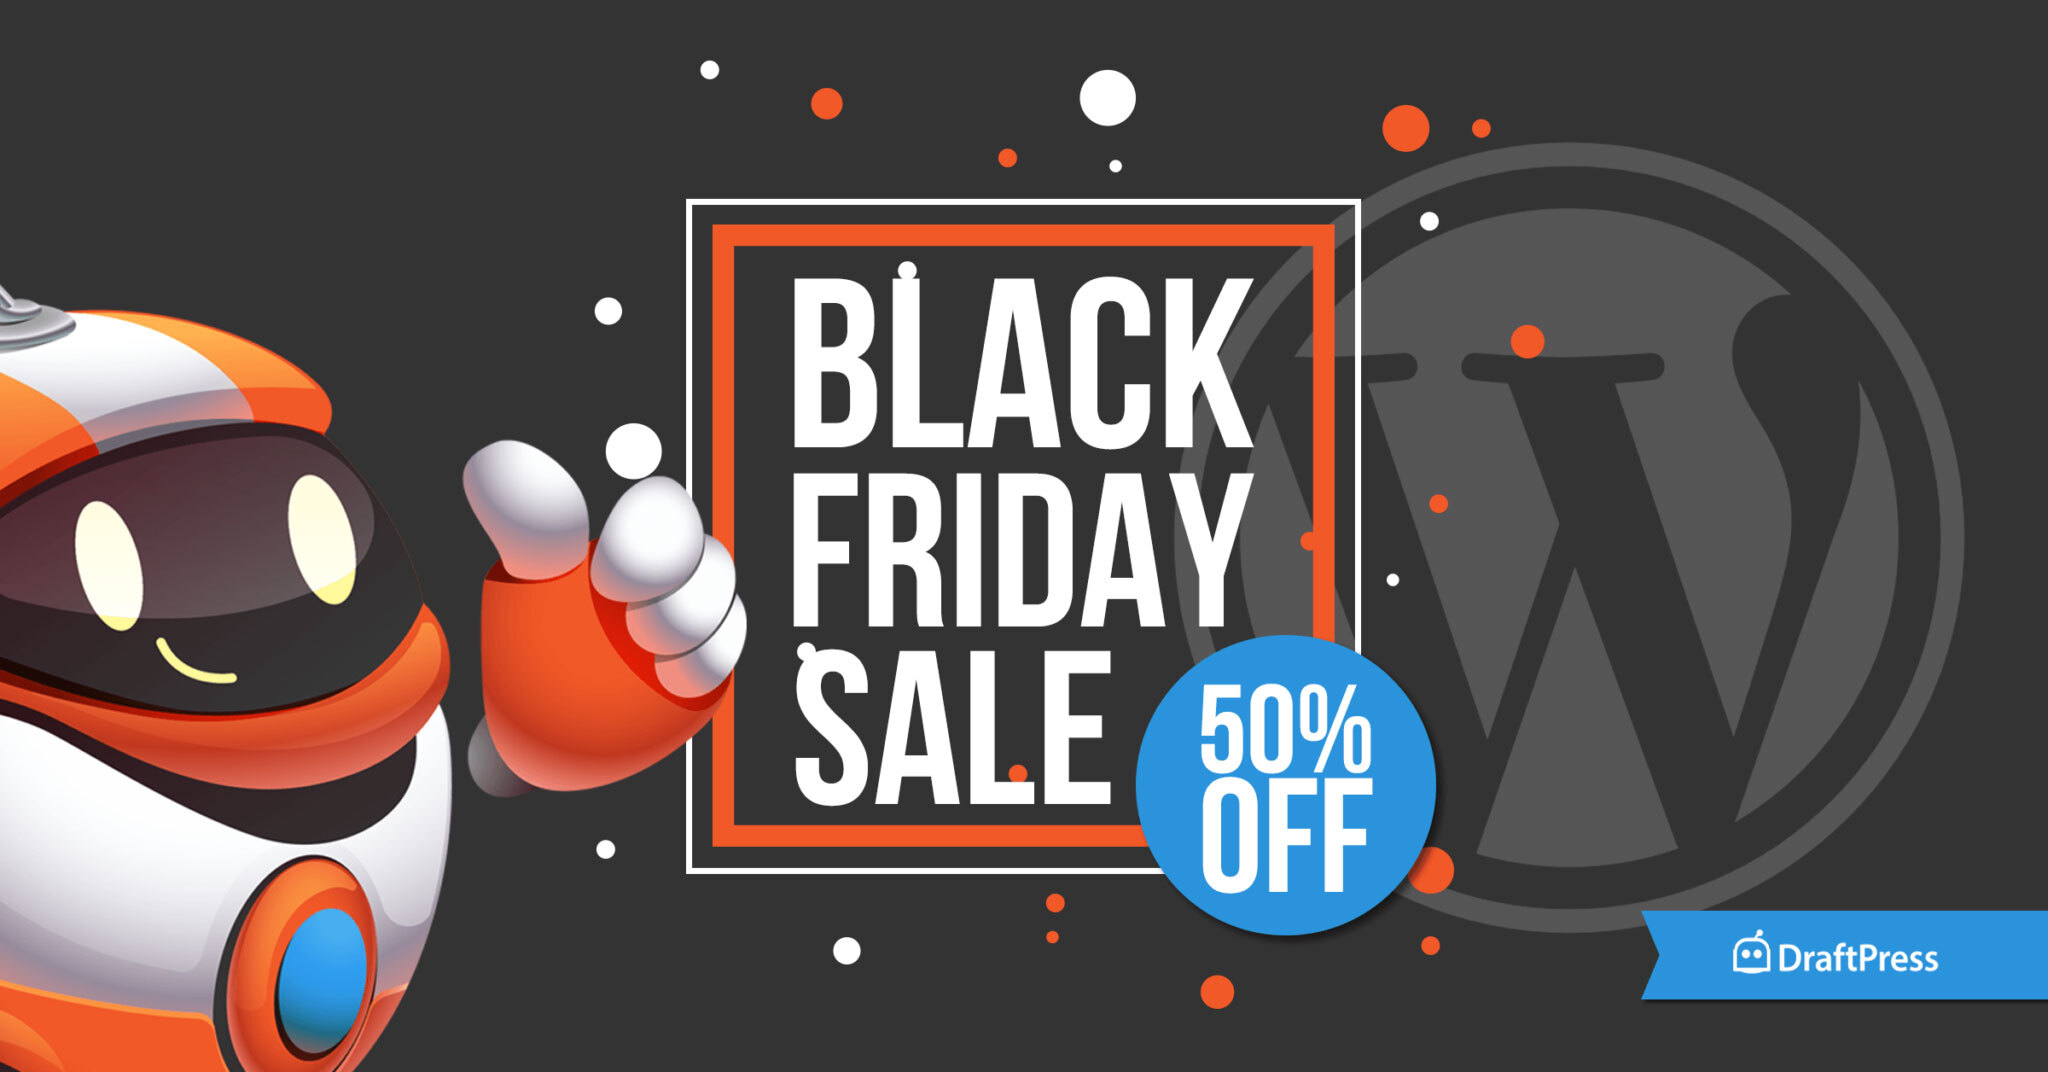 DraftPress Black Friday Sale WordPress Promotion